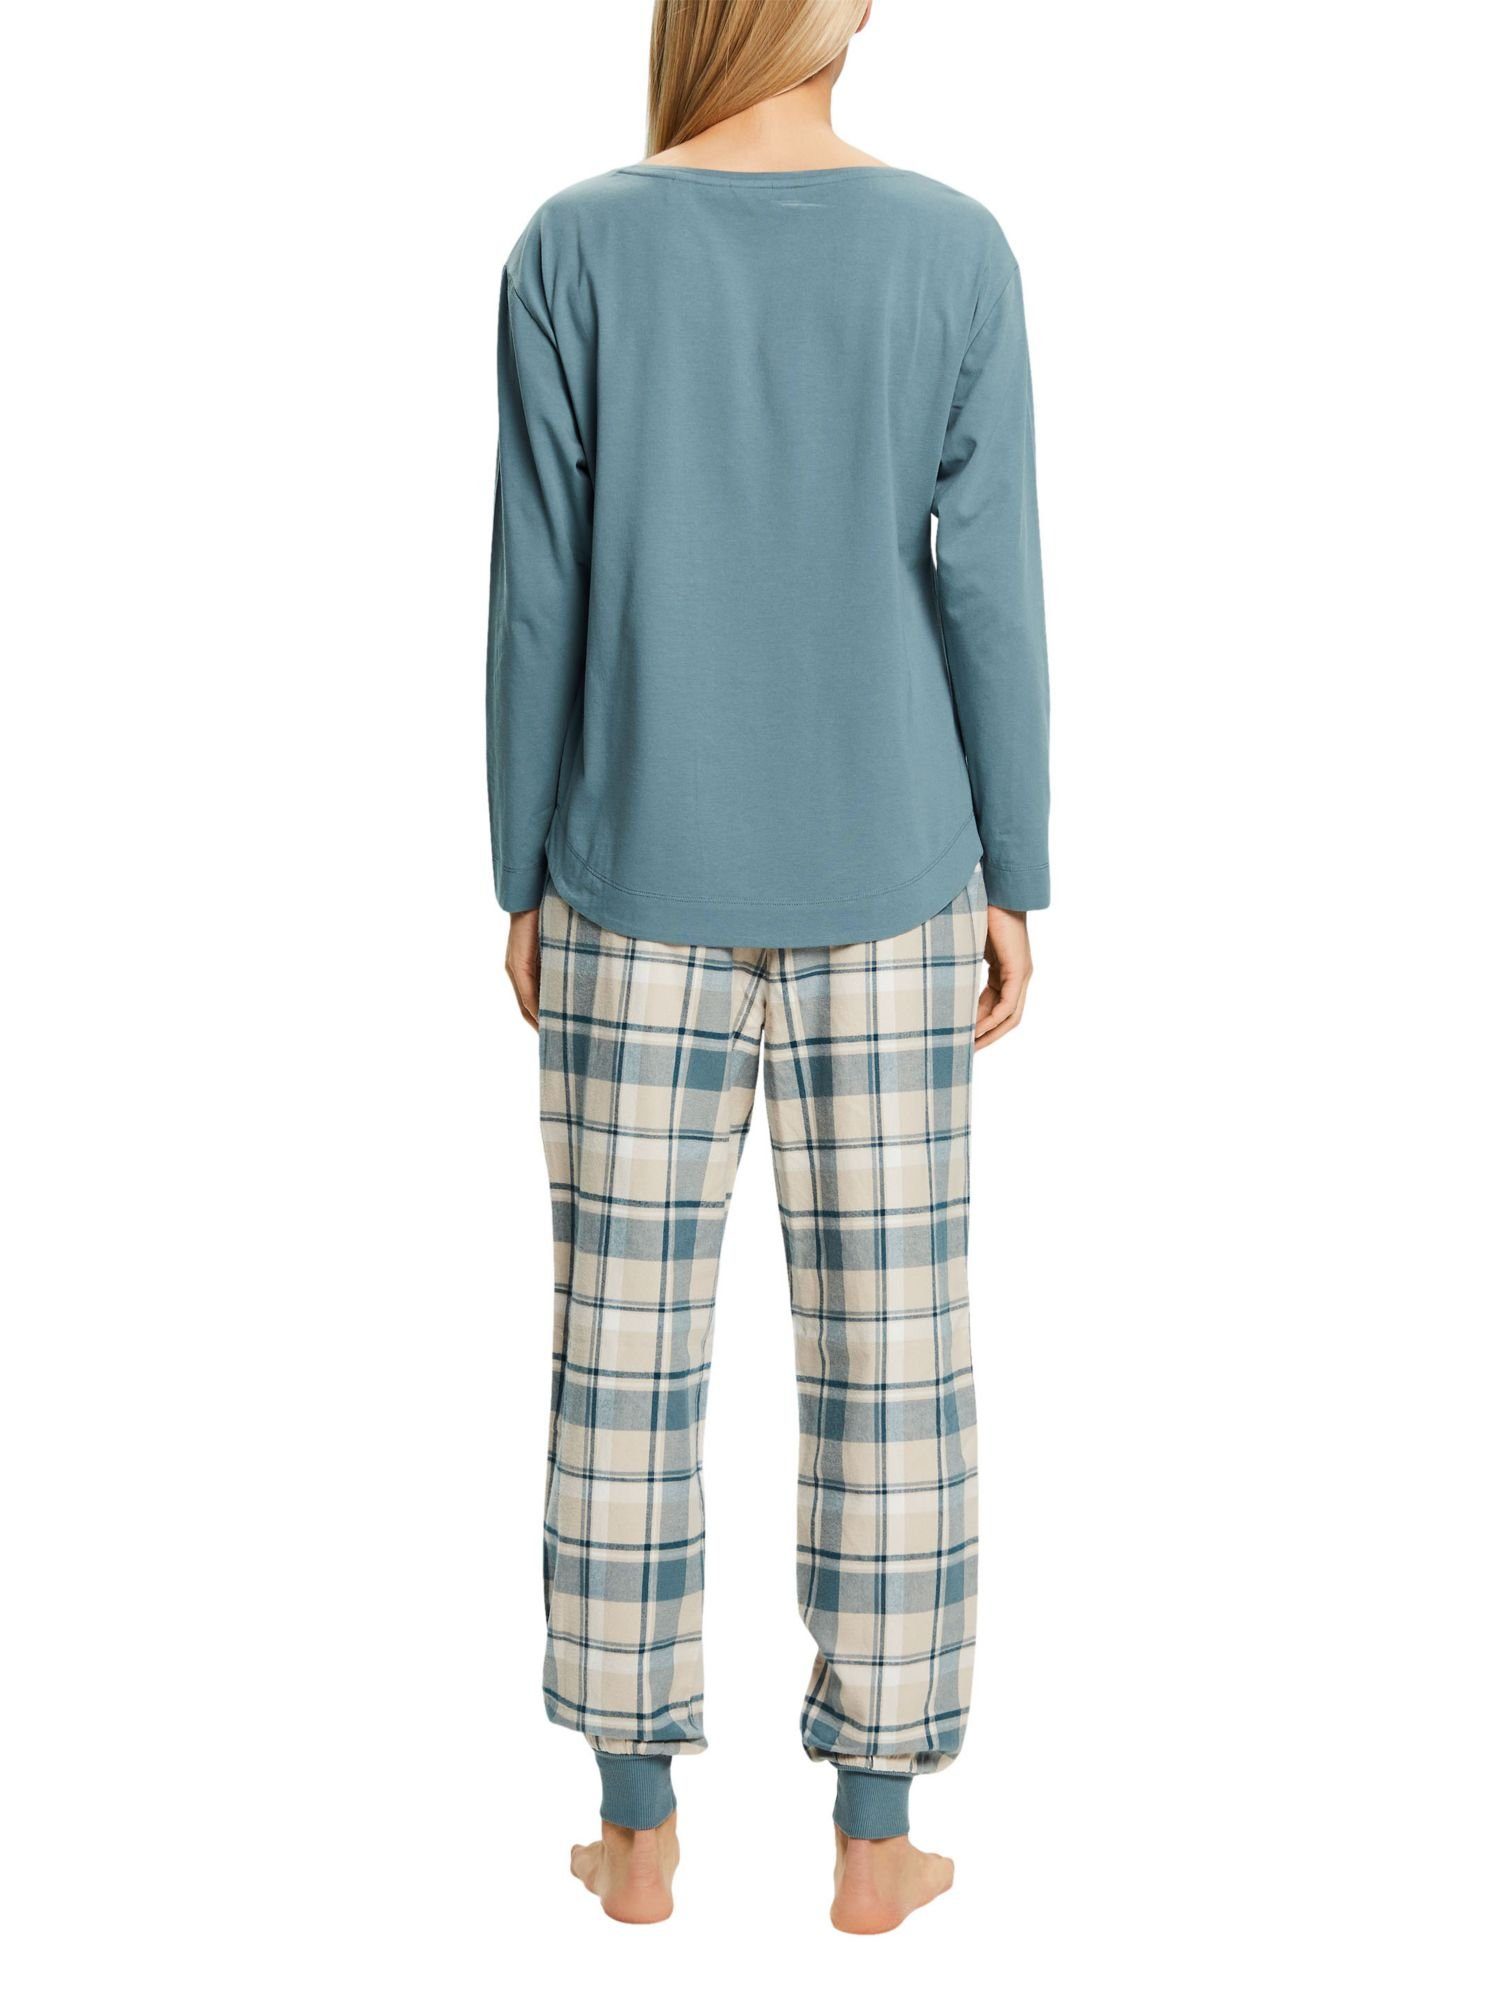 TEAL aus Pyjama-Set Esprit BLUE Flanell Pyjama NEW kariertem